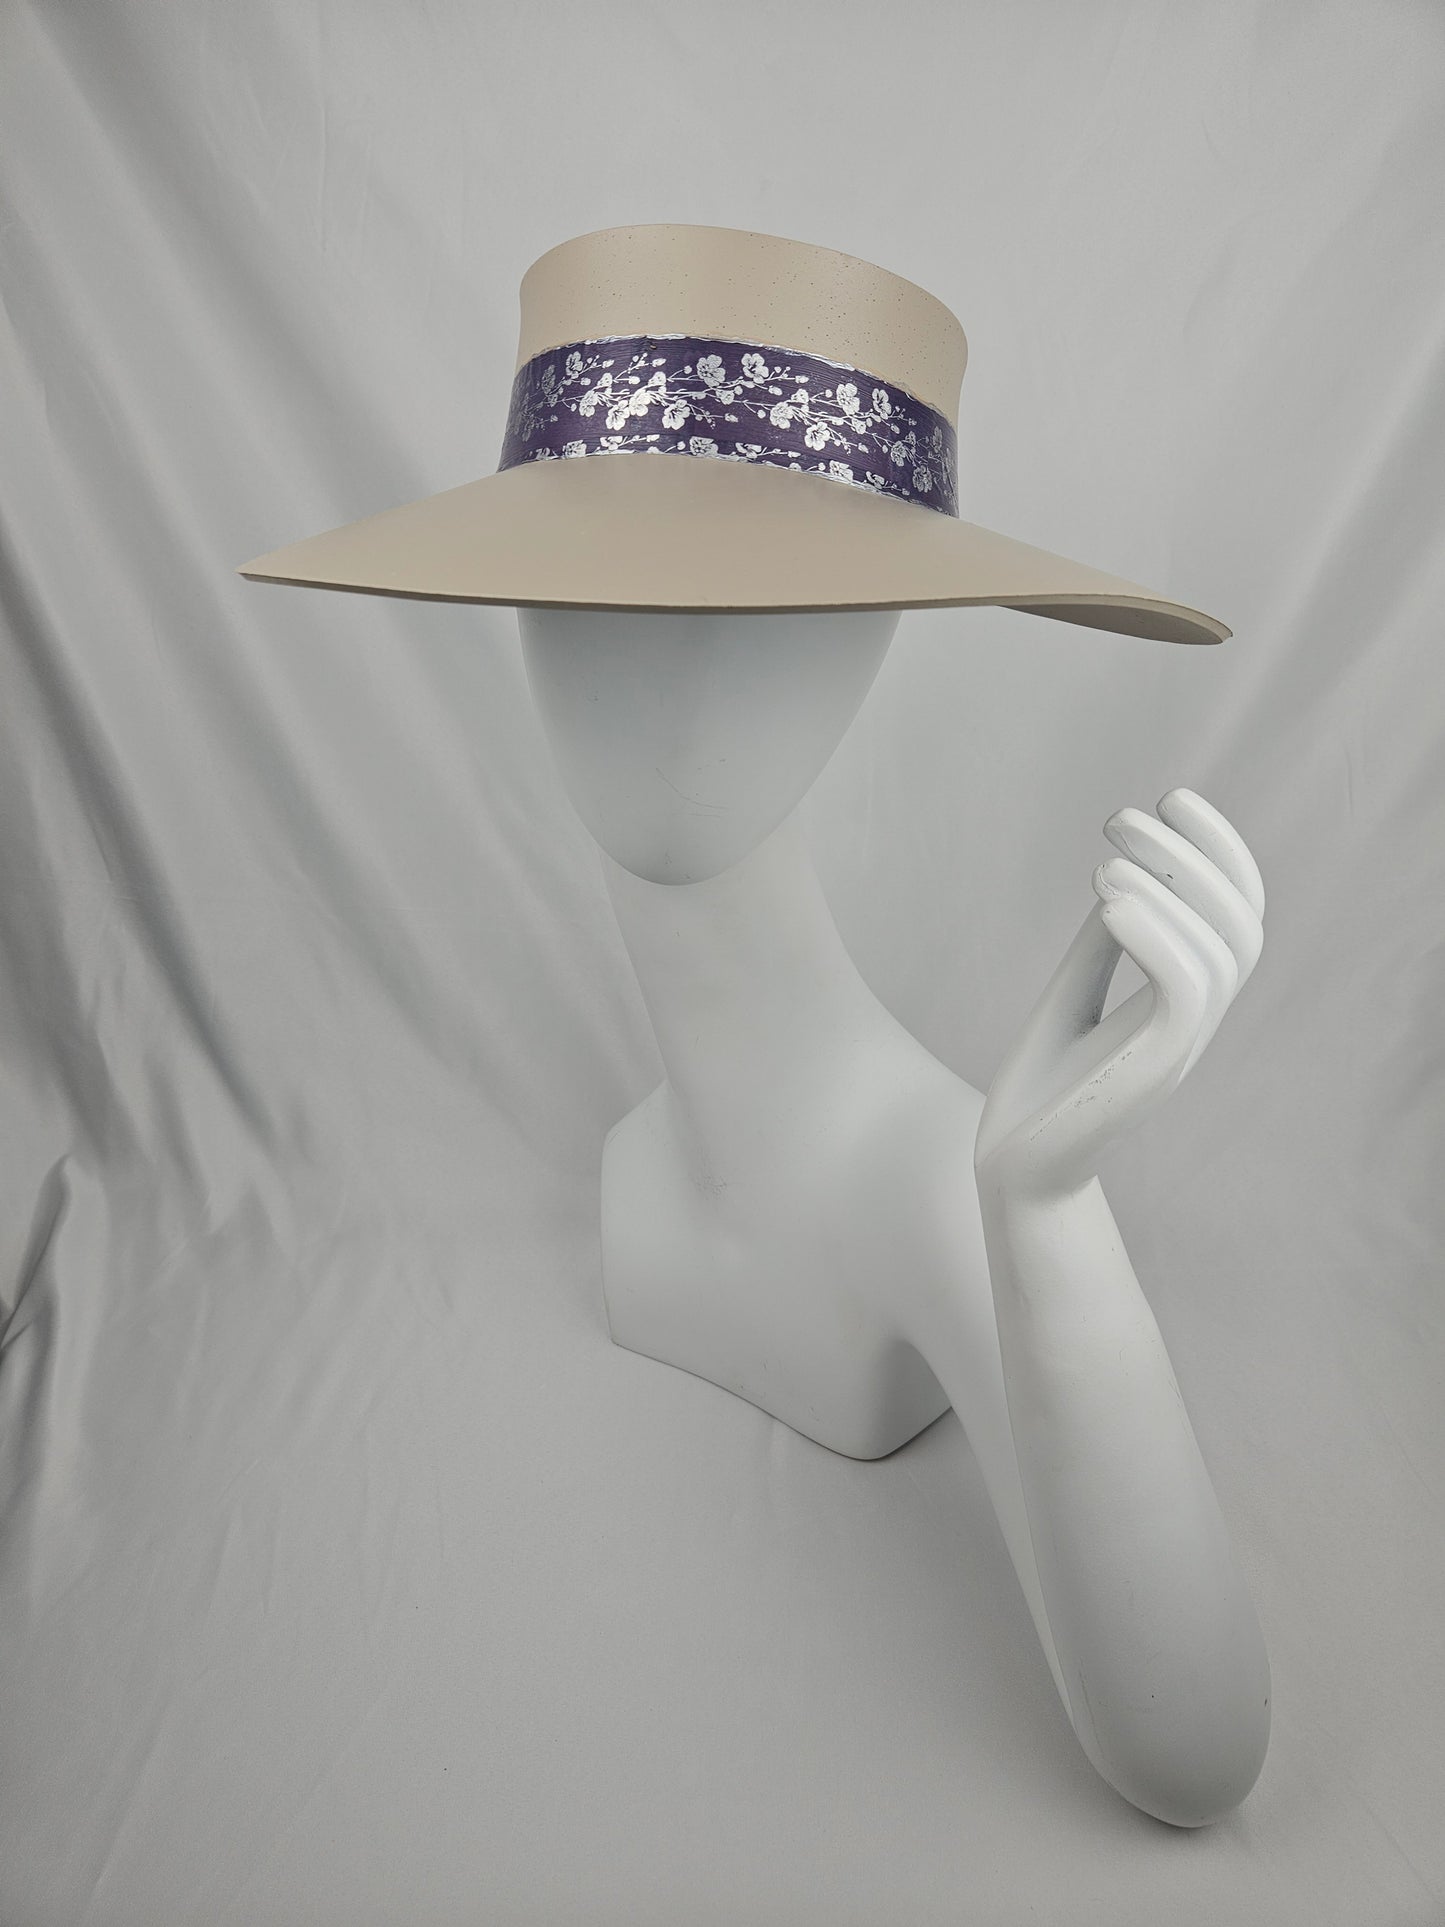 Truly Taupe Audrey Foam Sun Visor Hat with Purple/Blue/Silver Floral Band: Walks, Brunch, Swim, Garden, Golf, Easter, Faux Leather, Church, No Headache